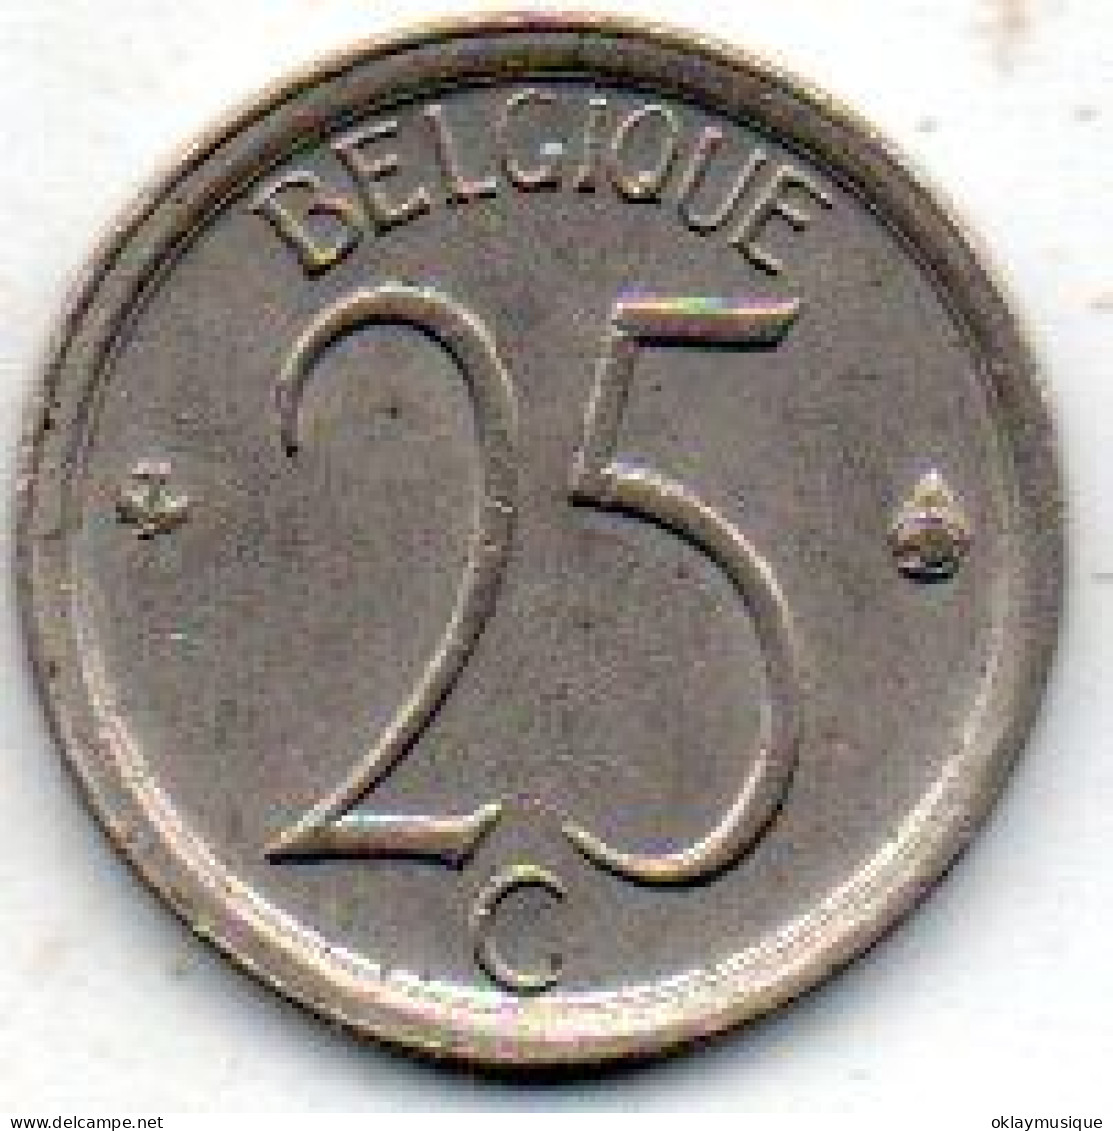 25 Centimes 1972 - 25 Cent